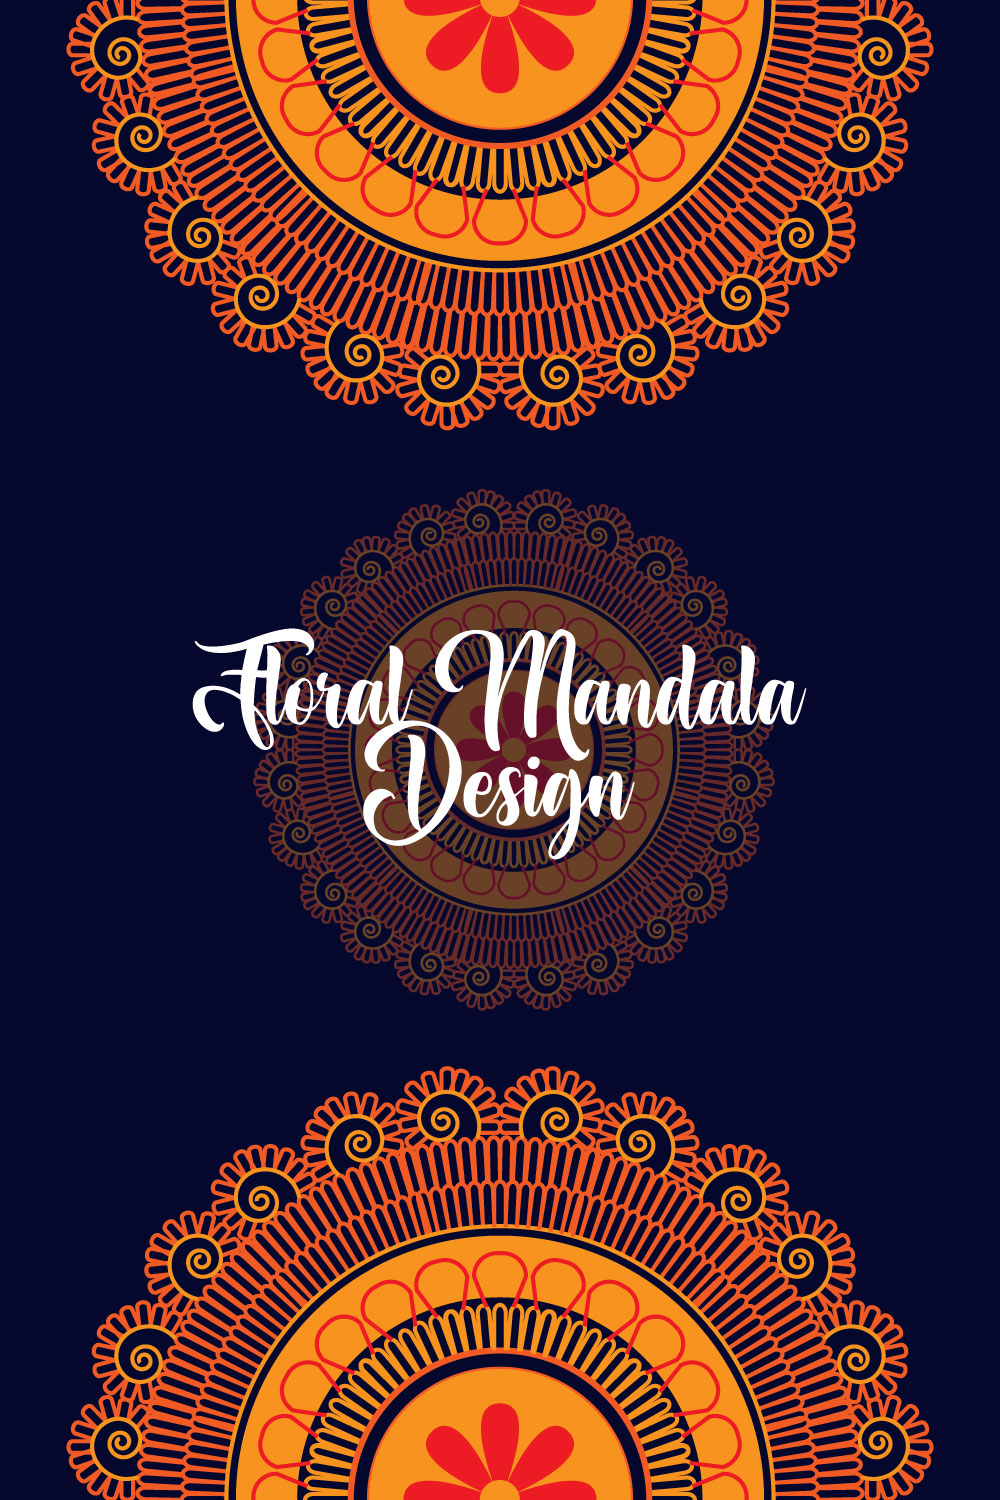 Floral Mandala Design Template pinterest preview image.